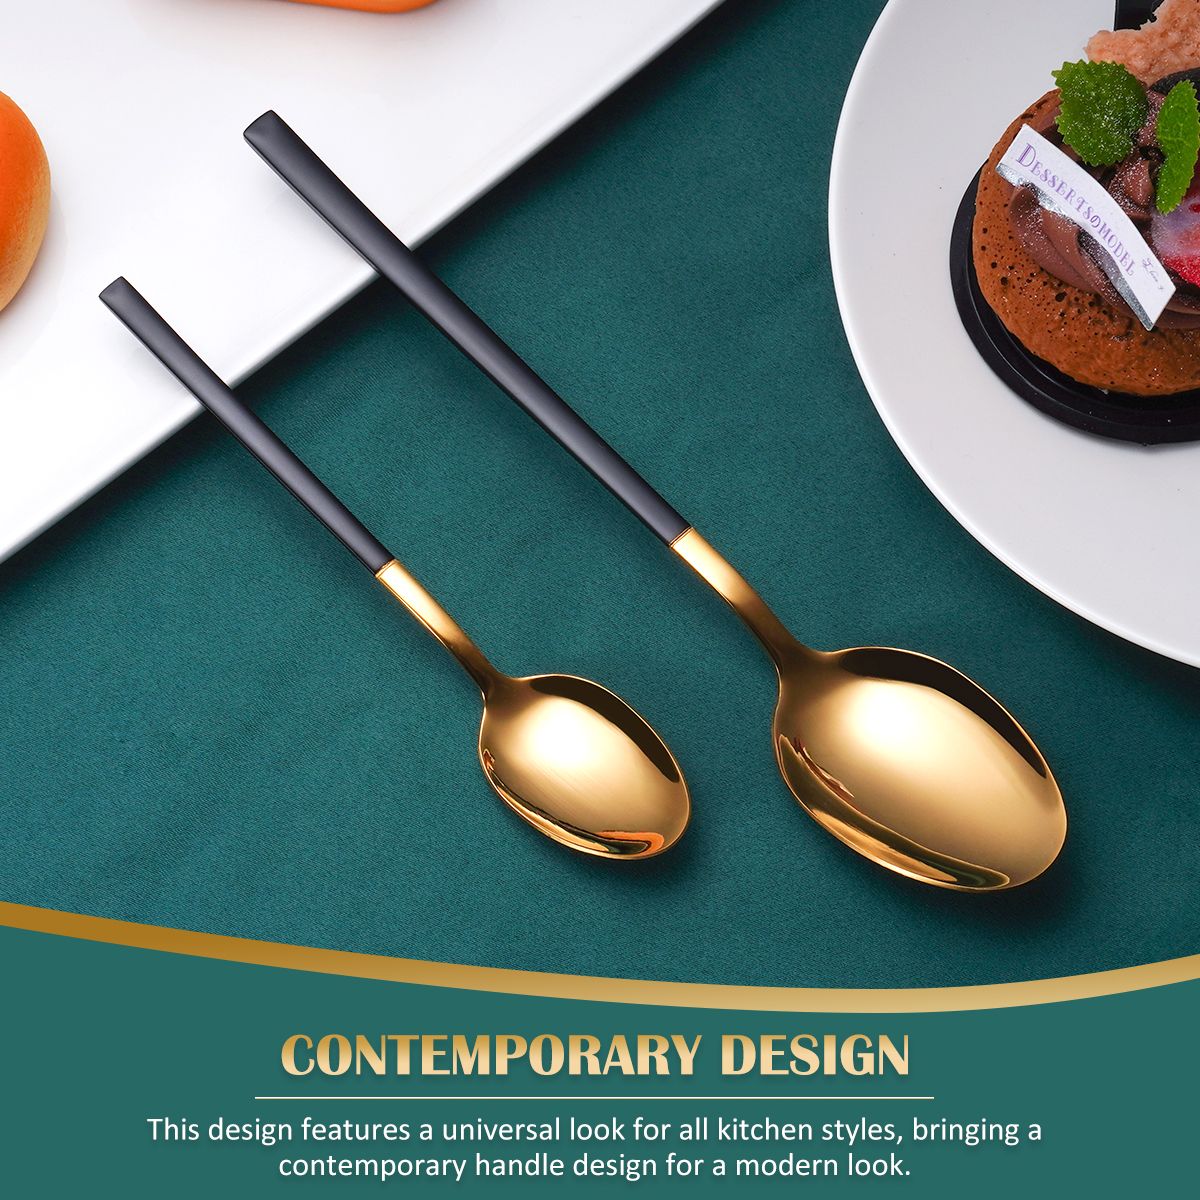 Oneida Golden Sugar And Spoon Mikasa Flatware Silver Diner Table Spoons Factory Manufacturer Supplier Gorham Silverware